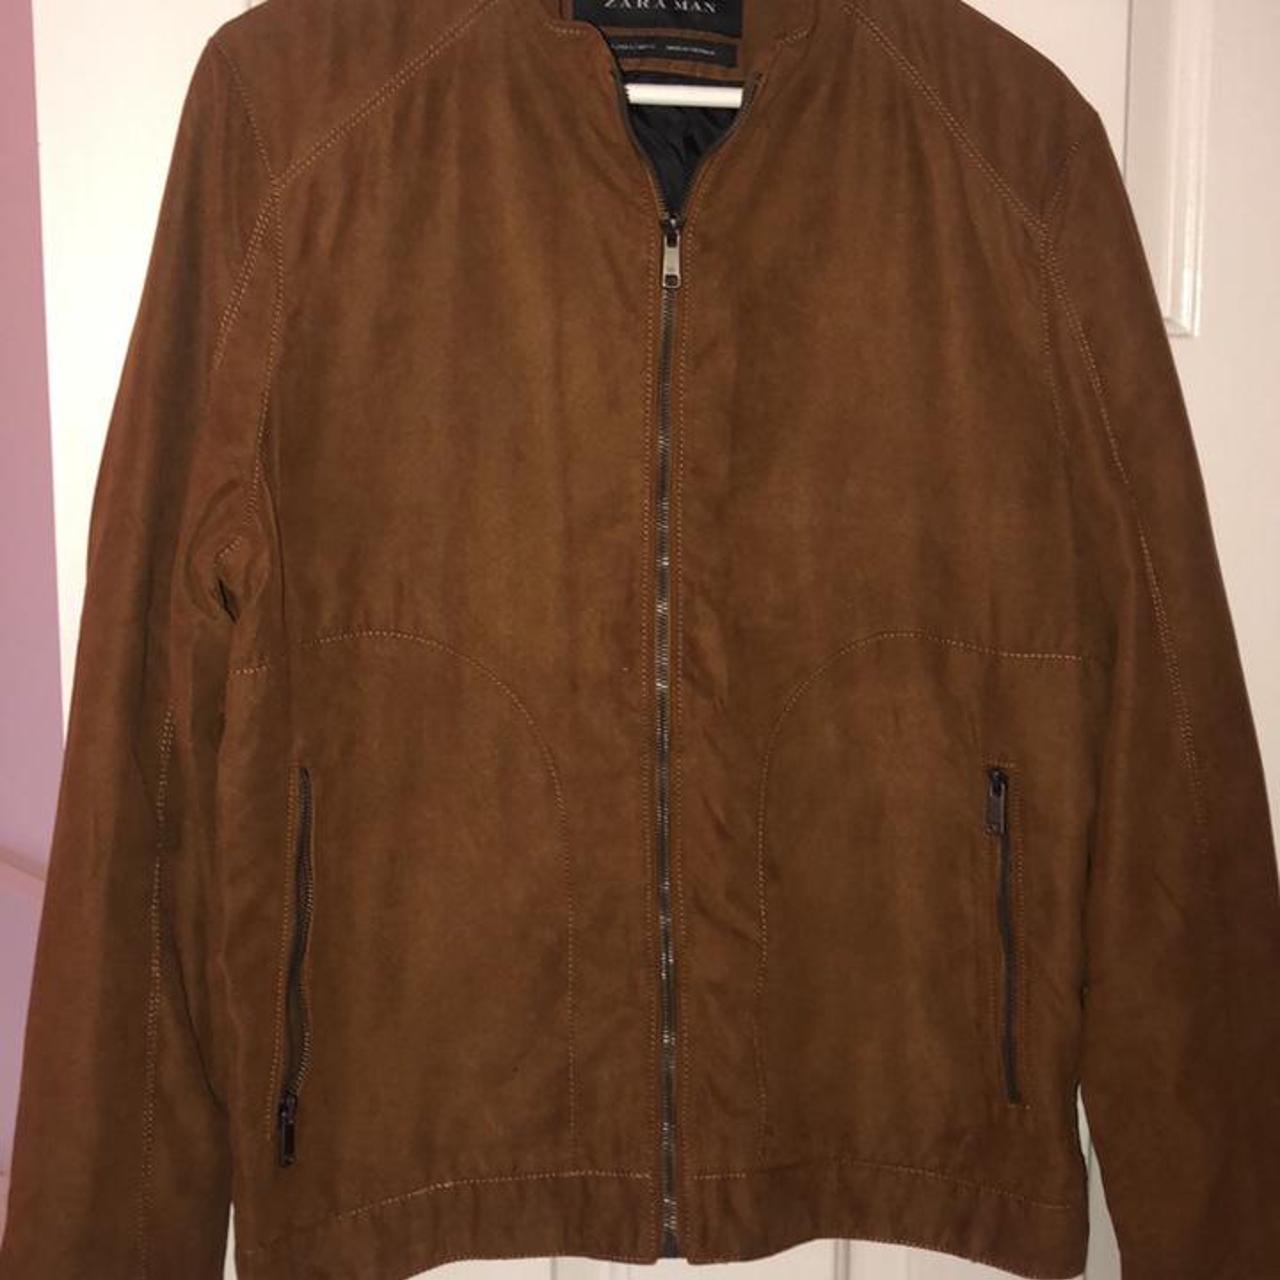 Zara Man faux suede brown jacket - size large - Depop